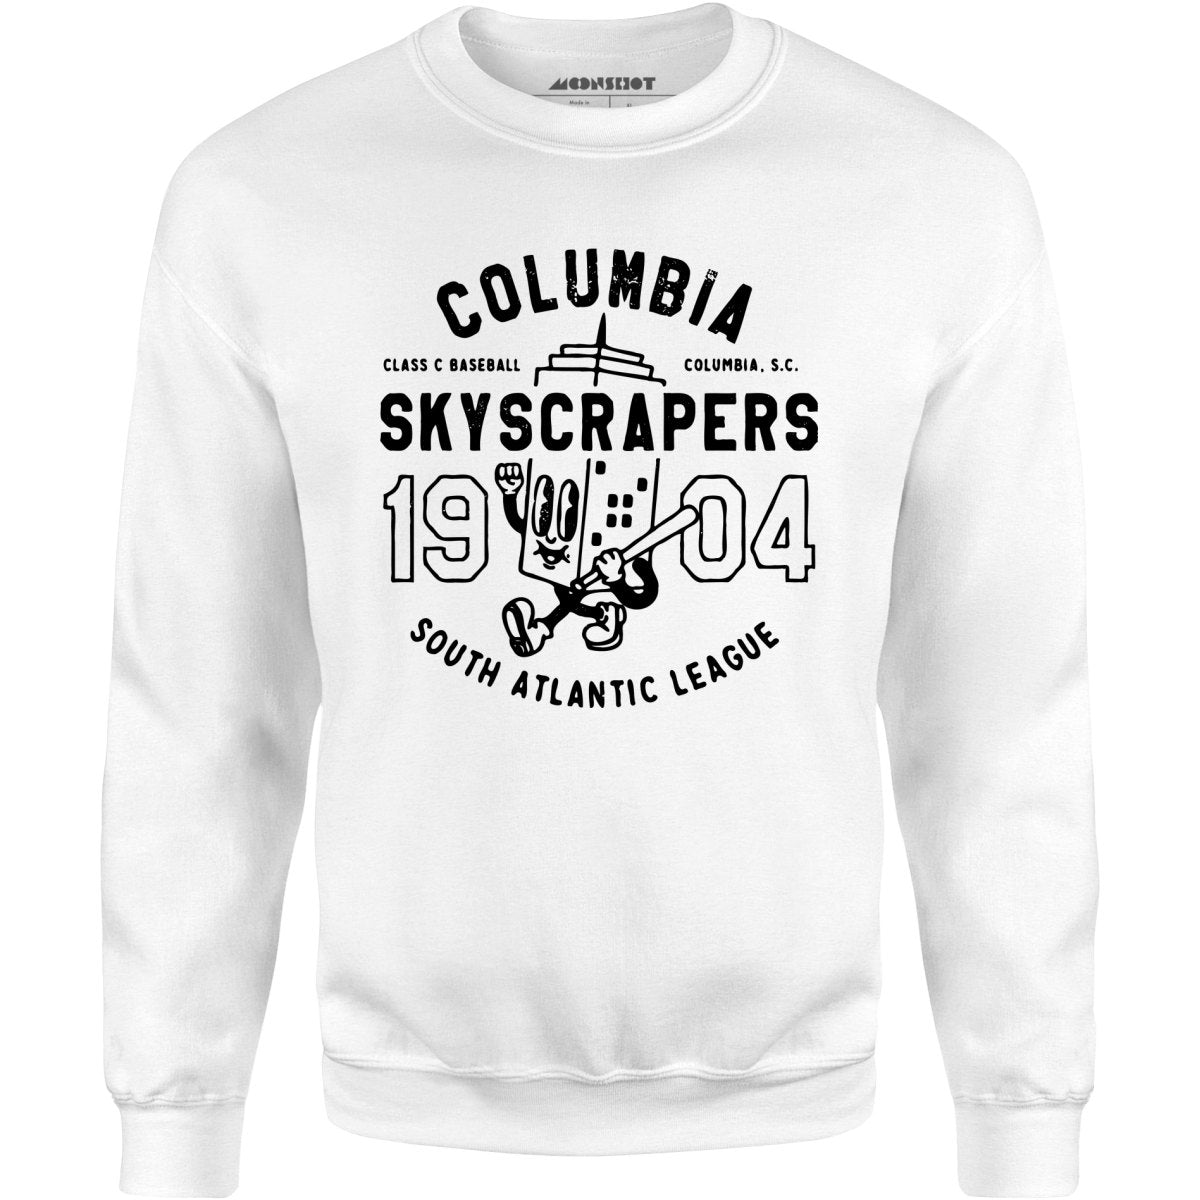 Columbia Skyscrapers - South Carolina - Vintage Defunct Baseball Teams - Unisex Sweatshirt